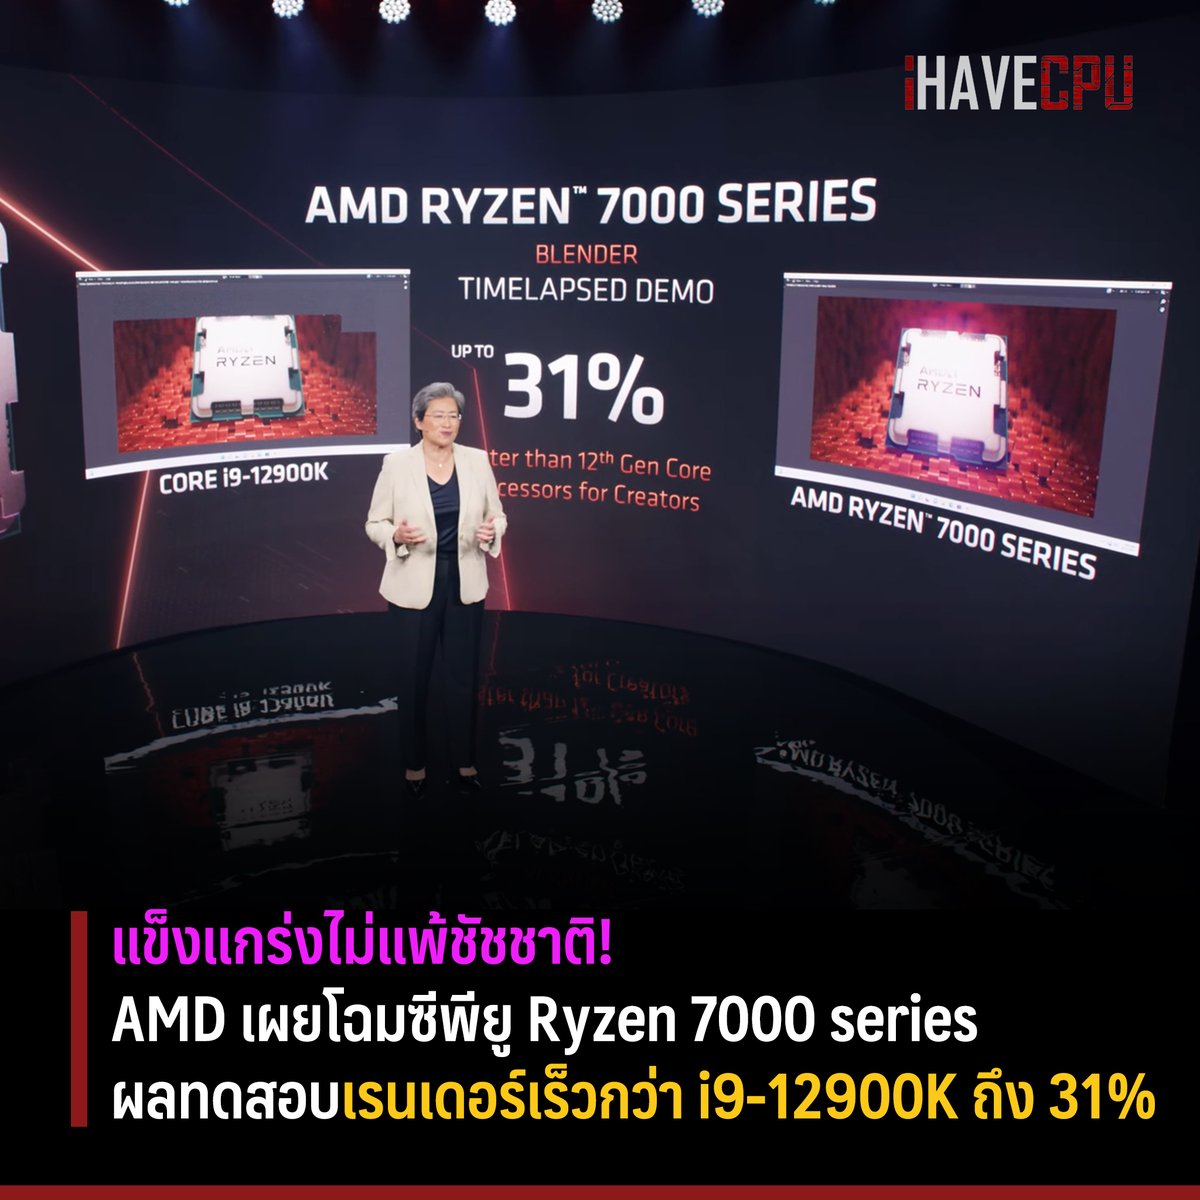 #AMD เผยโฉมซีพียู #Ryzen 7000 series รุ่นใหม่สุดโหf พร้อมเปิดตัวเร็วๆนี้ 🔥

AMD เป็นเจ้าภาพจัดงานด้านคอมพิวเตอร์ประสิทธิภาพสูงที่งาน #Computex2022 ซึ่งมี CEO, Dr. Lisa Su เป็นคนนำเสนอประกาศต่างๆ เน้นการประกาศระดับไฮเอนด์ในส่วนของกลุ่มโน๊ตบุ๊คและพีซี

...